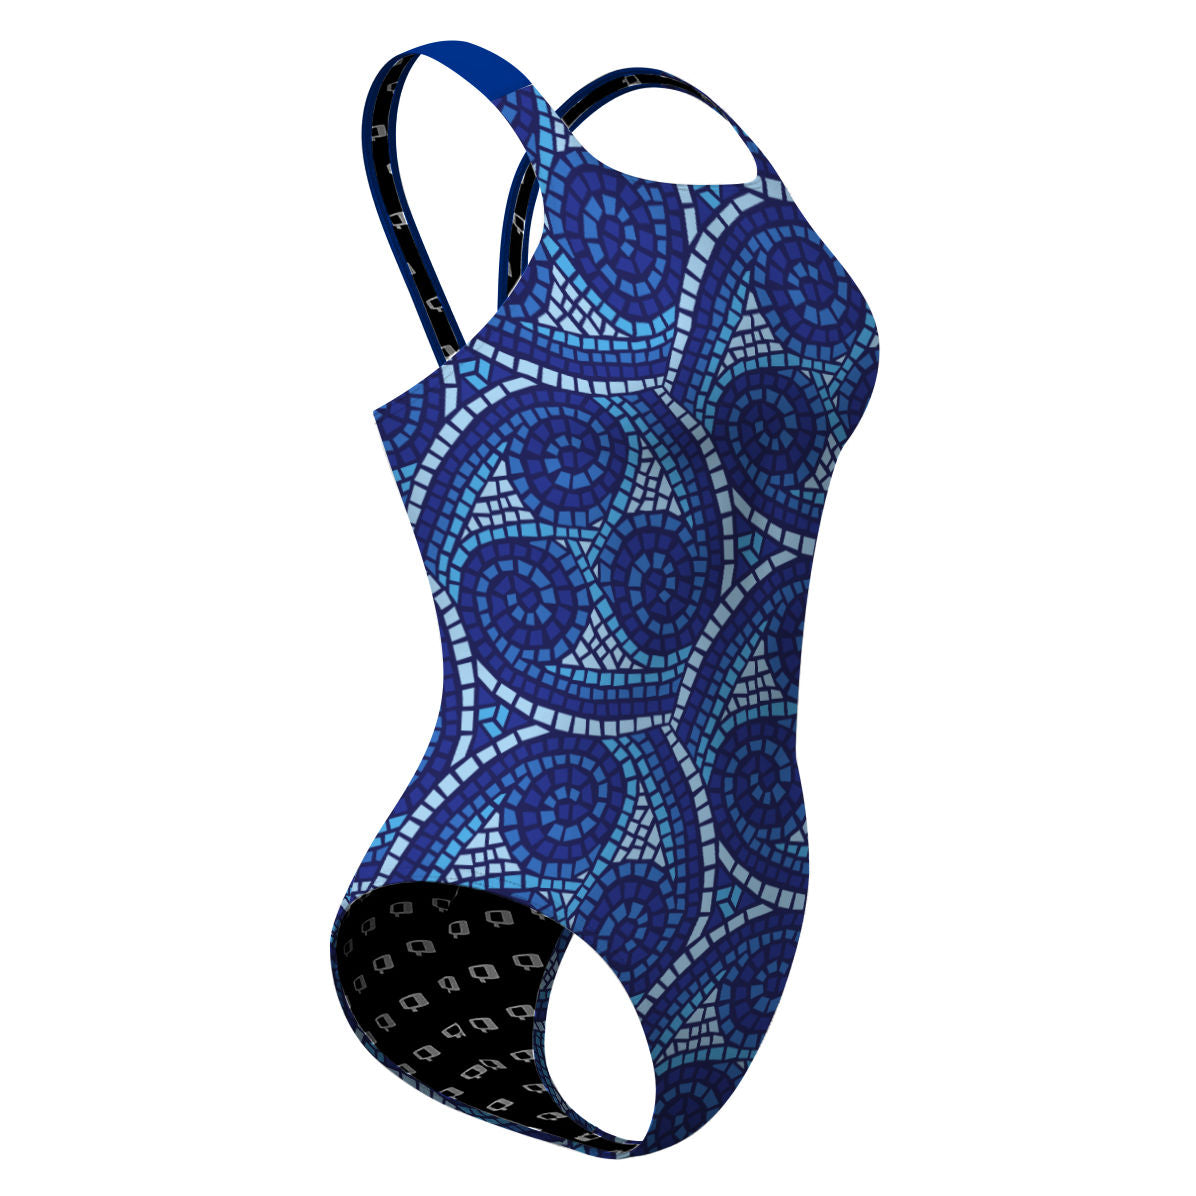 Blue Mosaic - Classic Strap Swimsuit